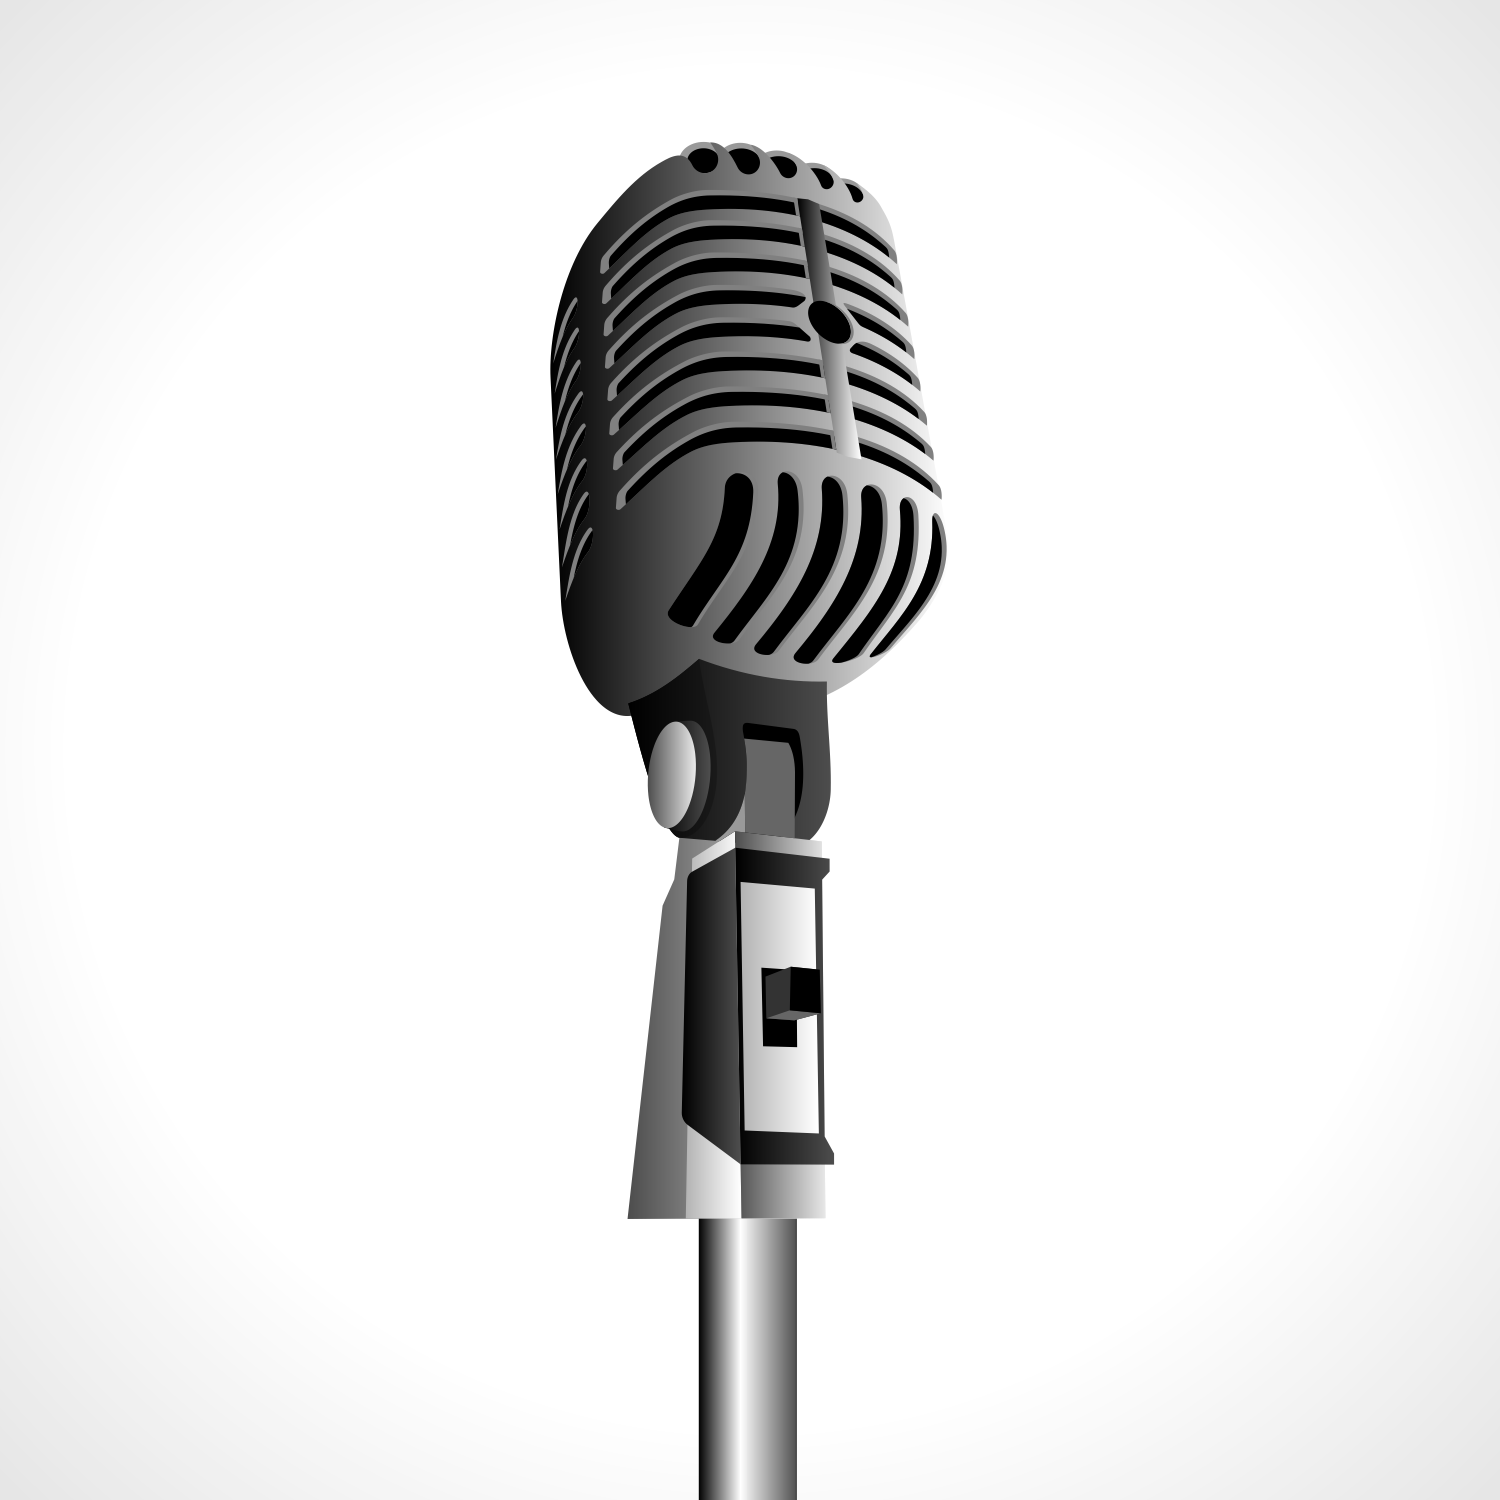 Микрофон на белом фоне. Ретро микрофон 60-х. HKUA 1817 микрофон. Ретро микрофон на стойке. Микрофон вектор.